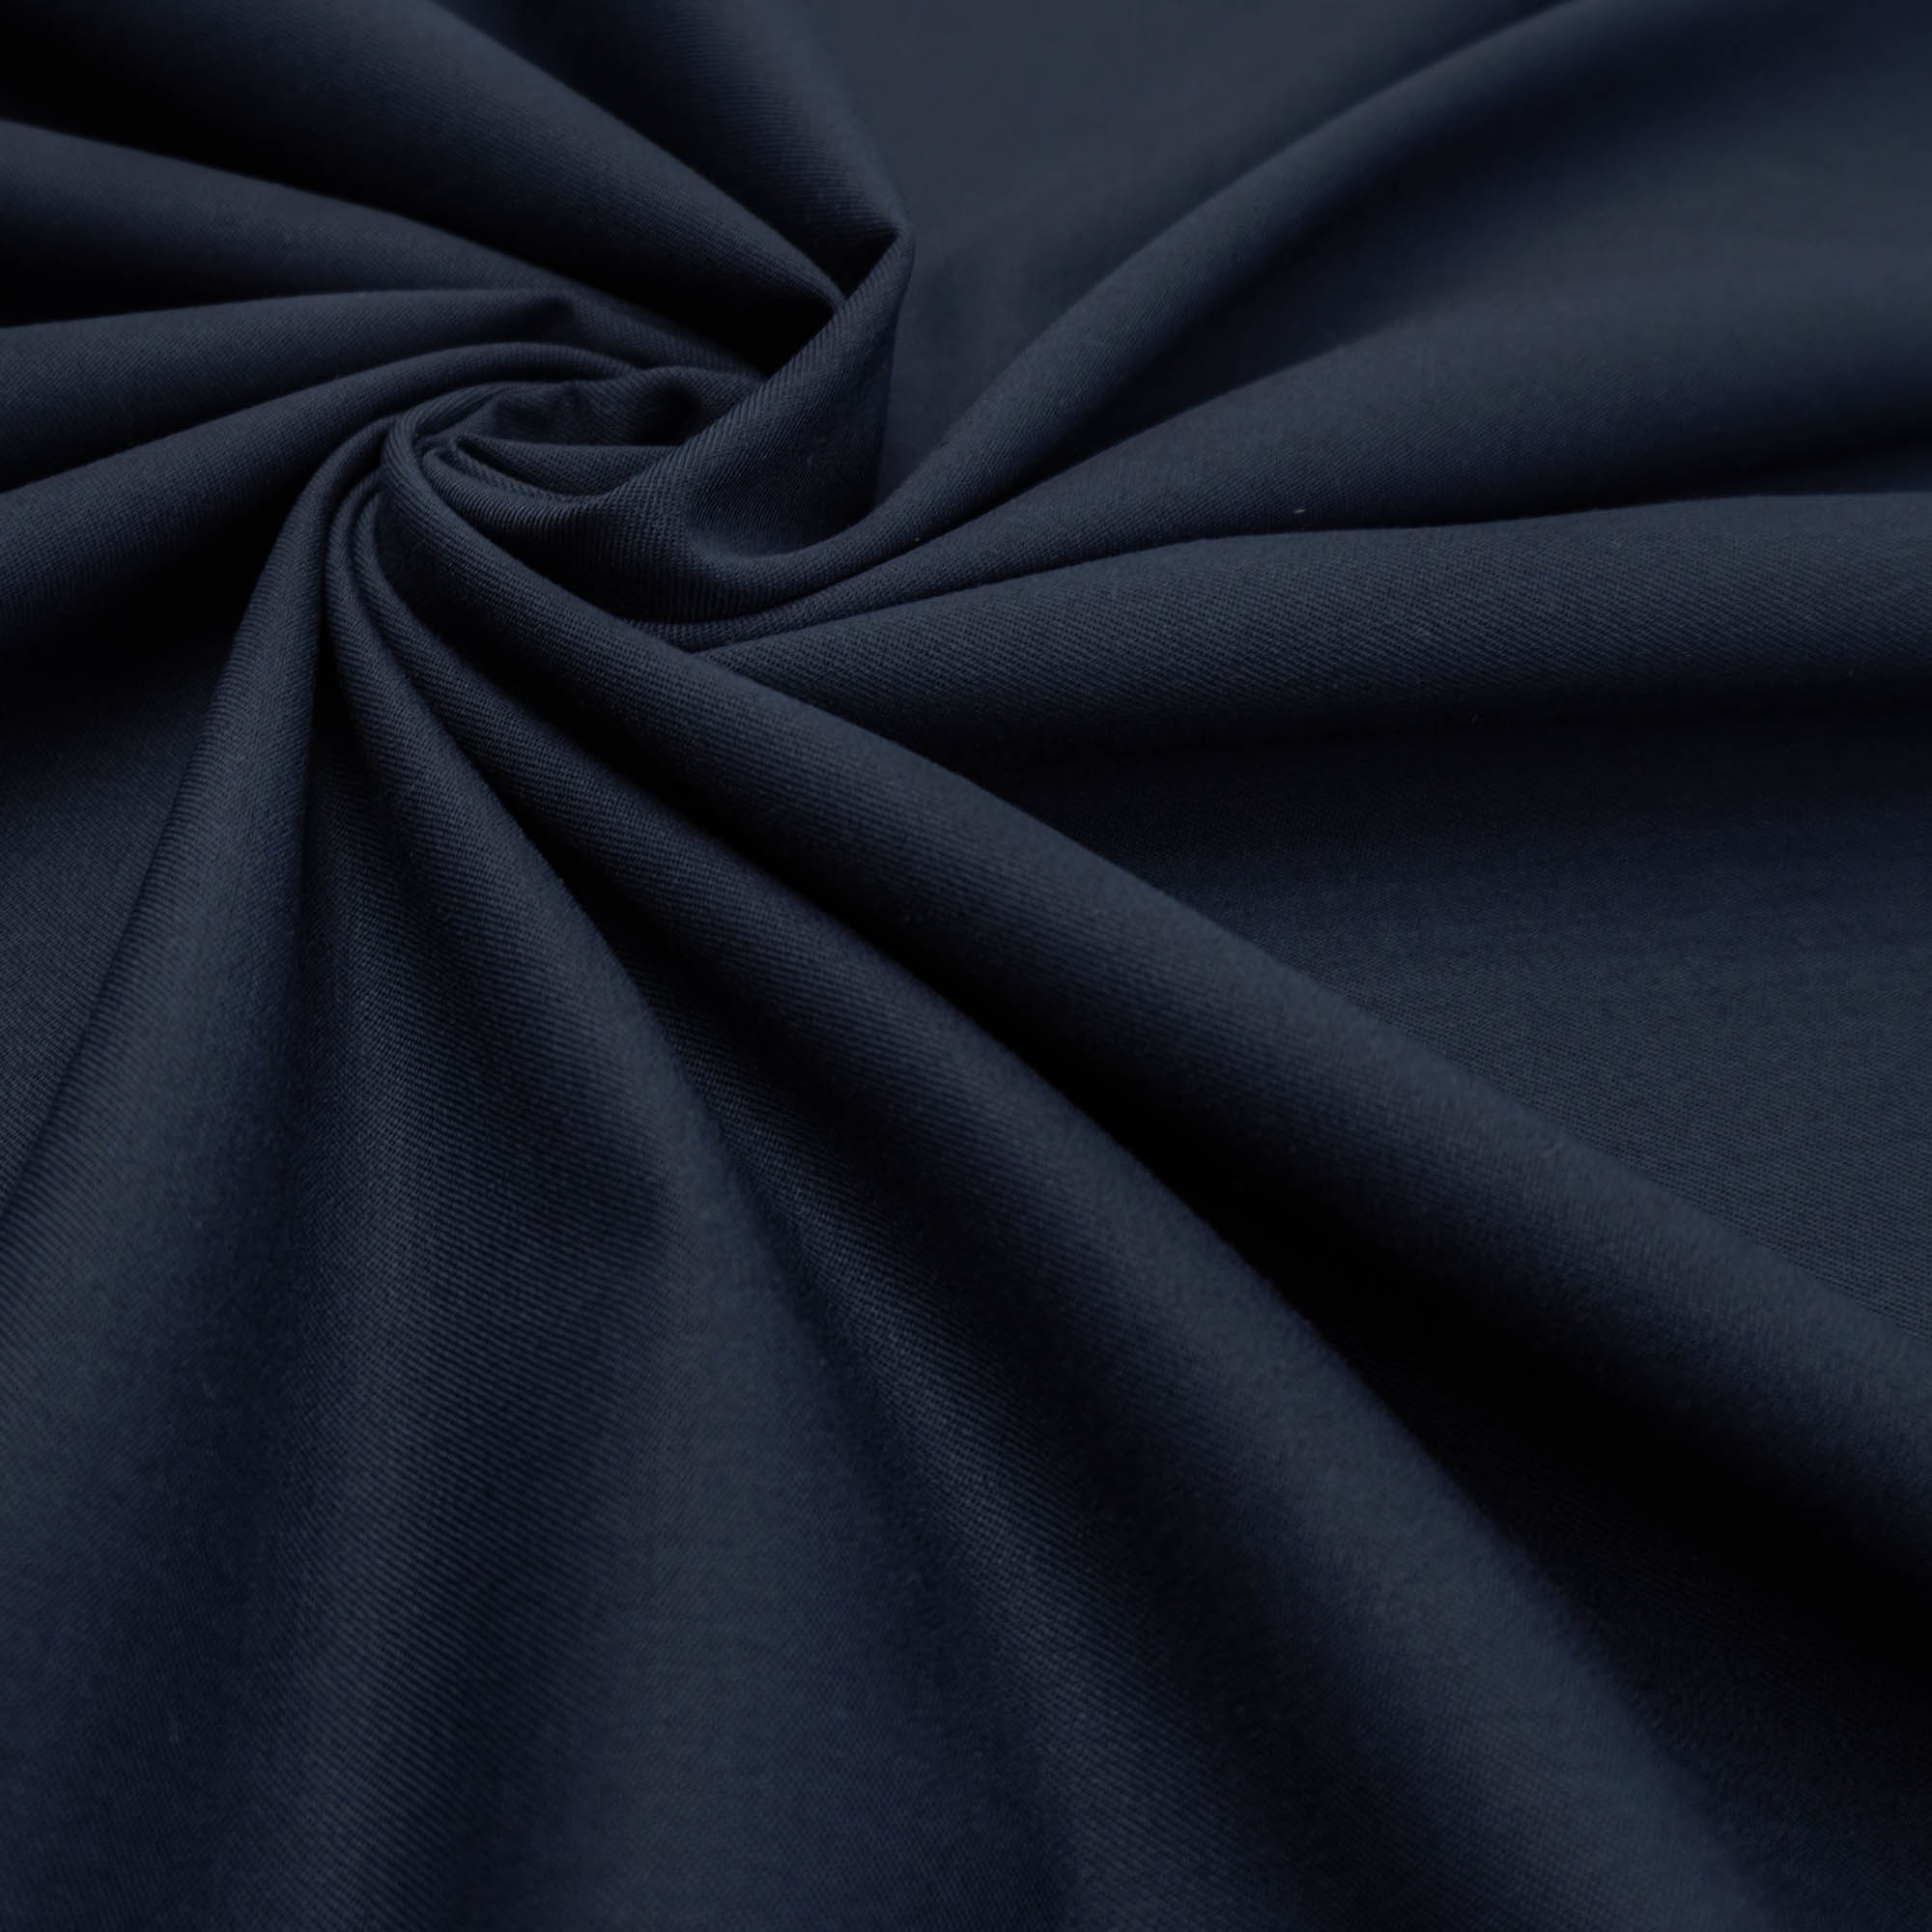 Tecido alfaiataria italiana azul marinho (tecido italiano legítimo)